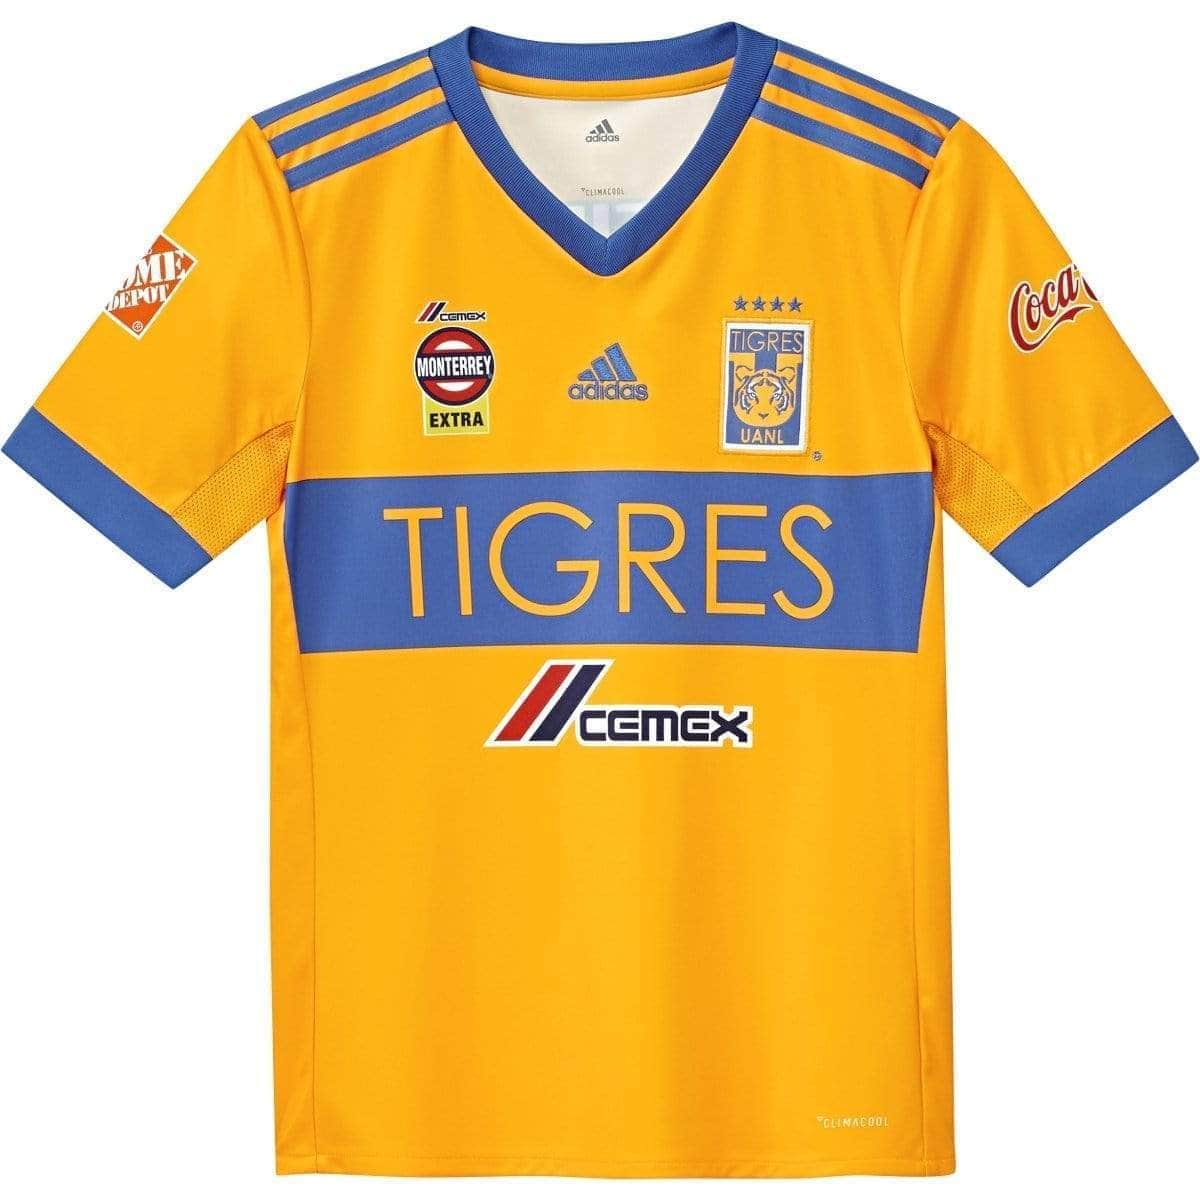 Legítimo sí mismo cohete adidas Kid's Tigres Home Jersey 17 Yellow – Best Buy Soccer